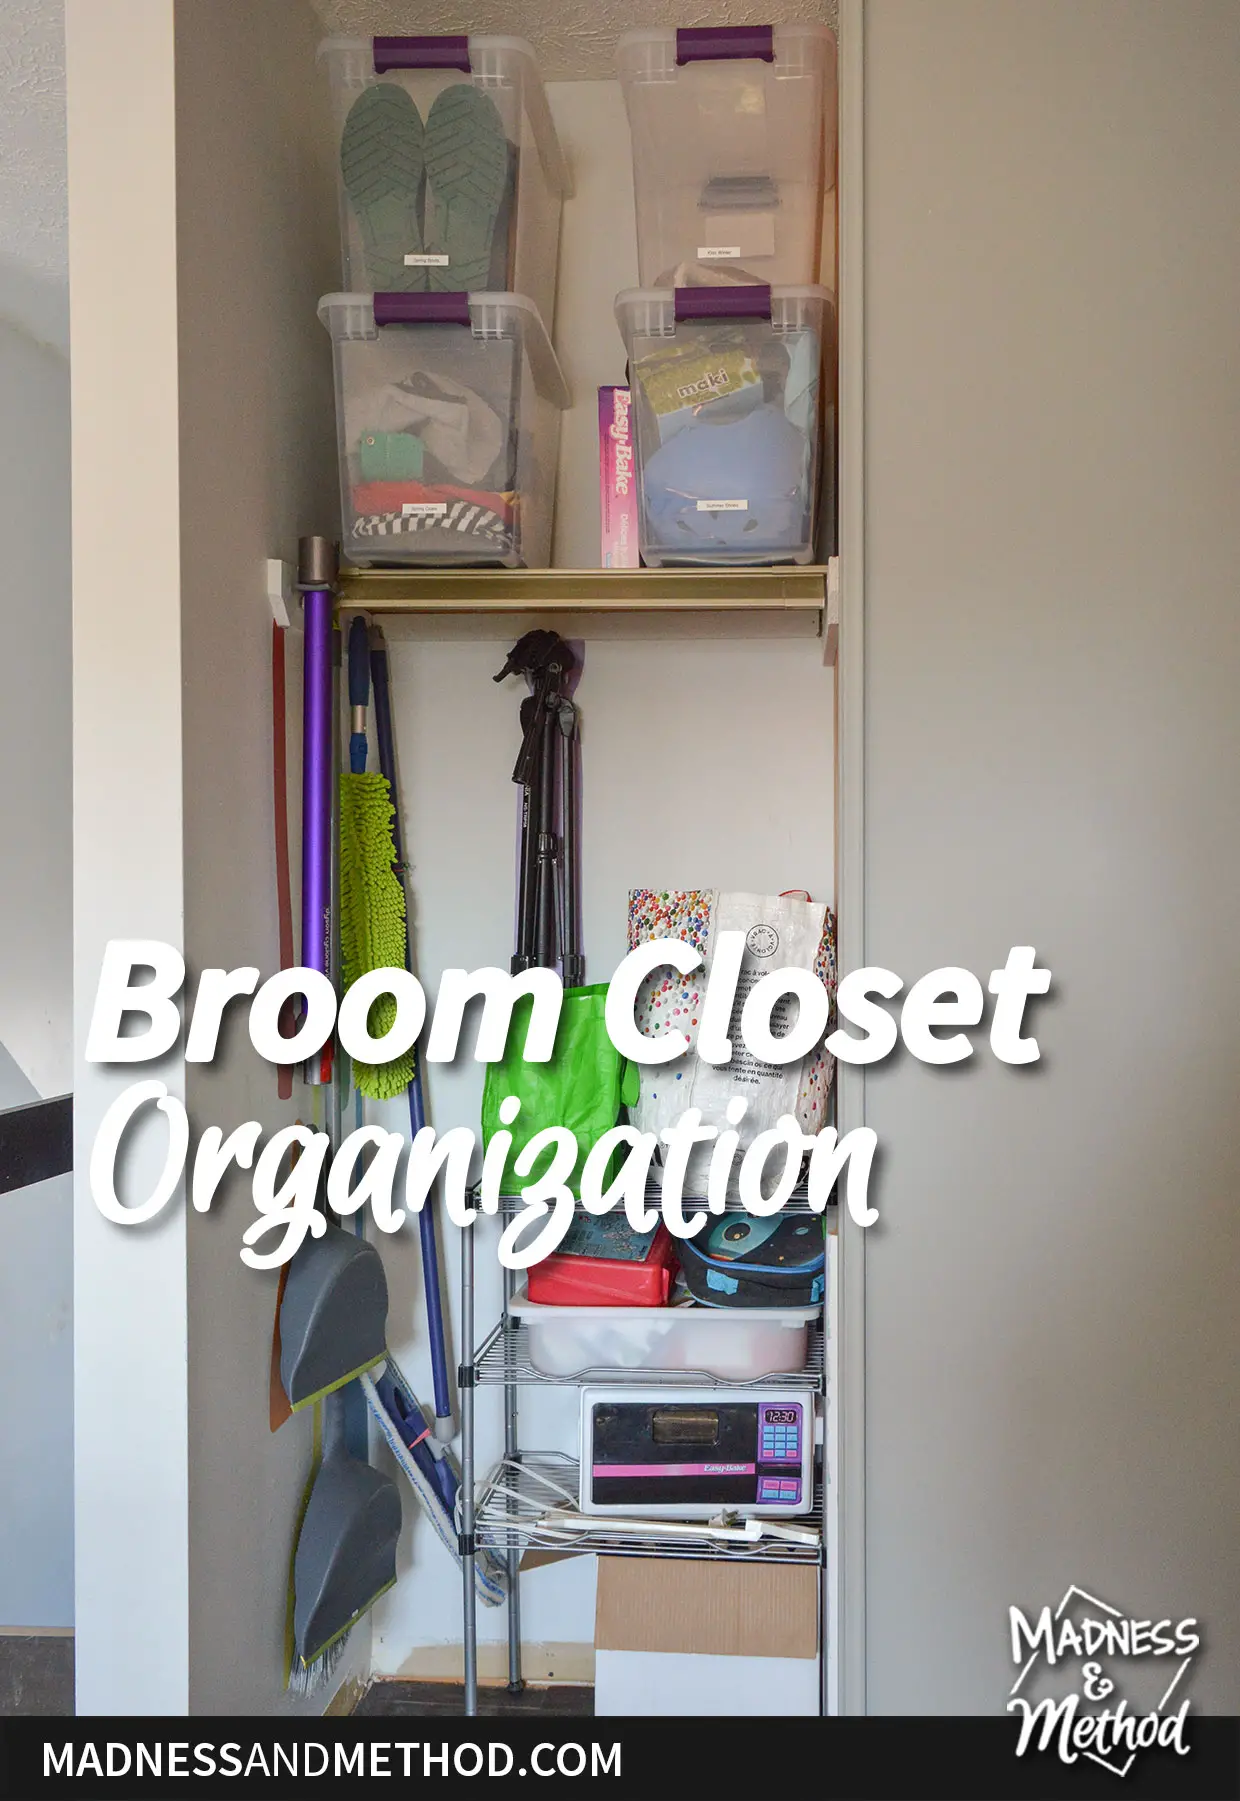 broom closet organization text overlay with closet interior